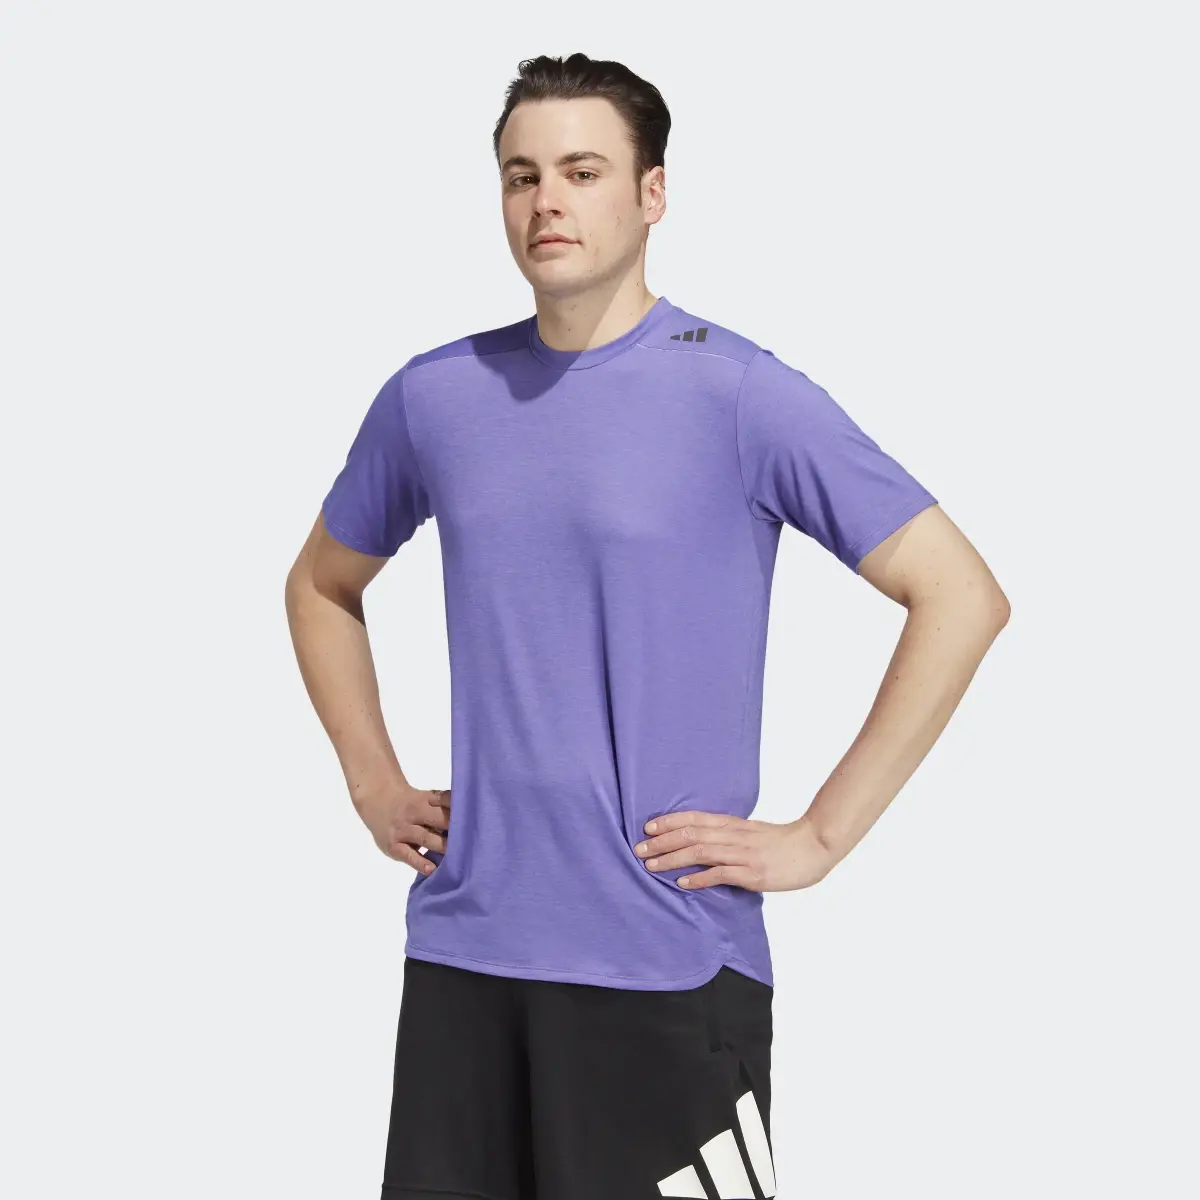 Adidas Designed for Training AEROREADY HIIT Colour-Shift Training T-Shirt. 2